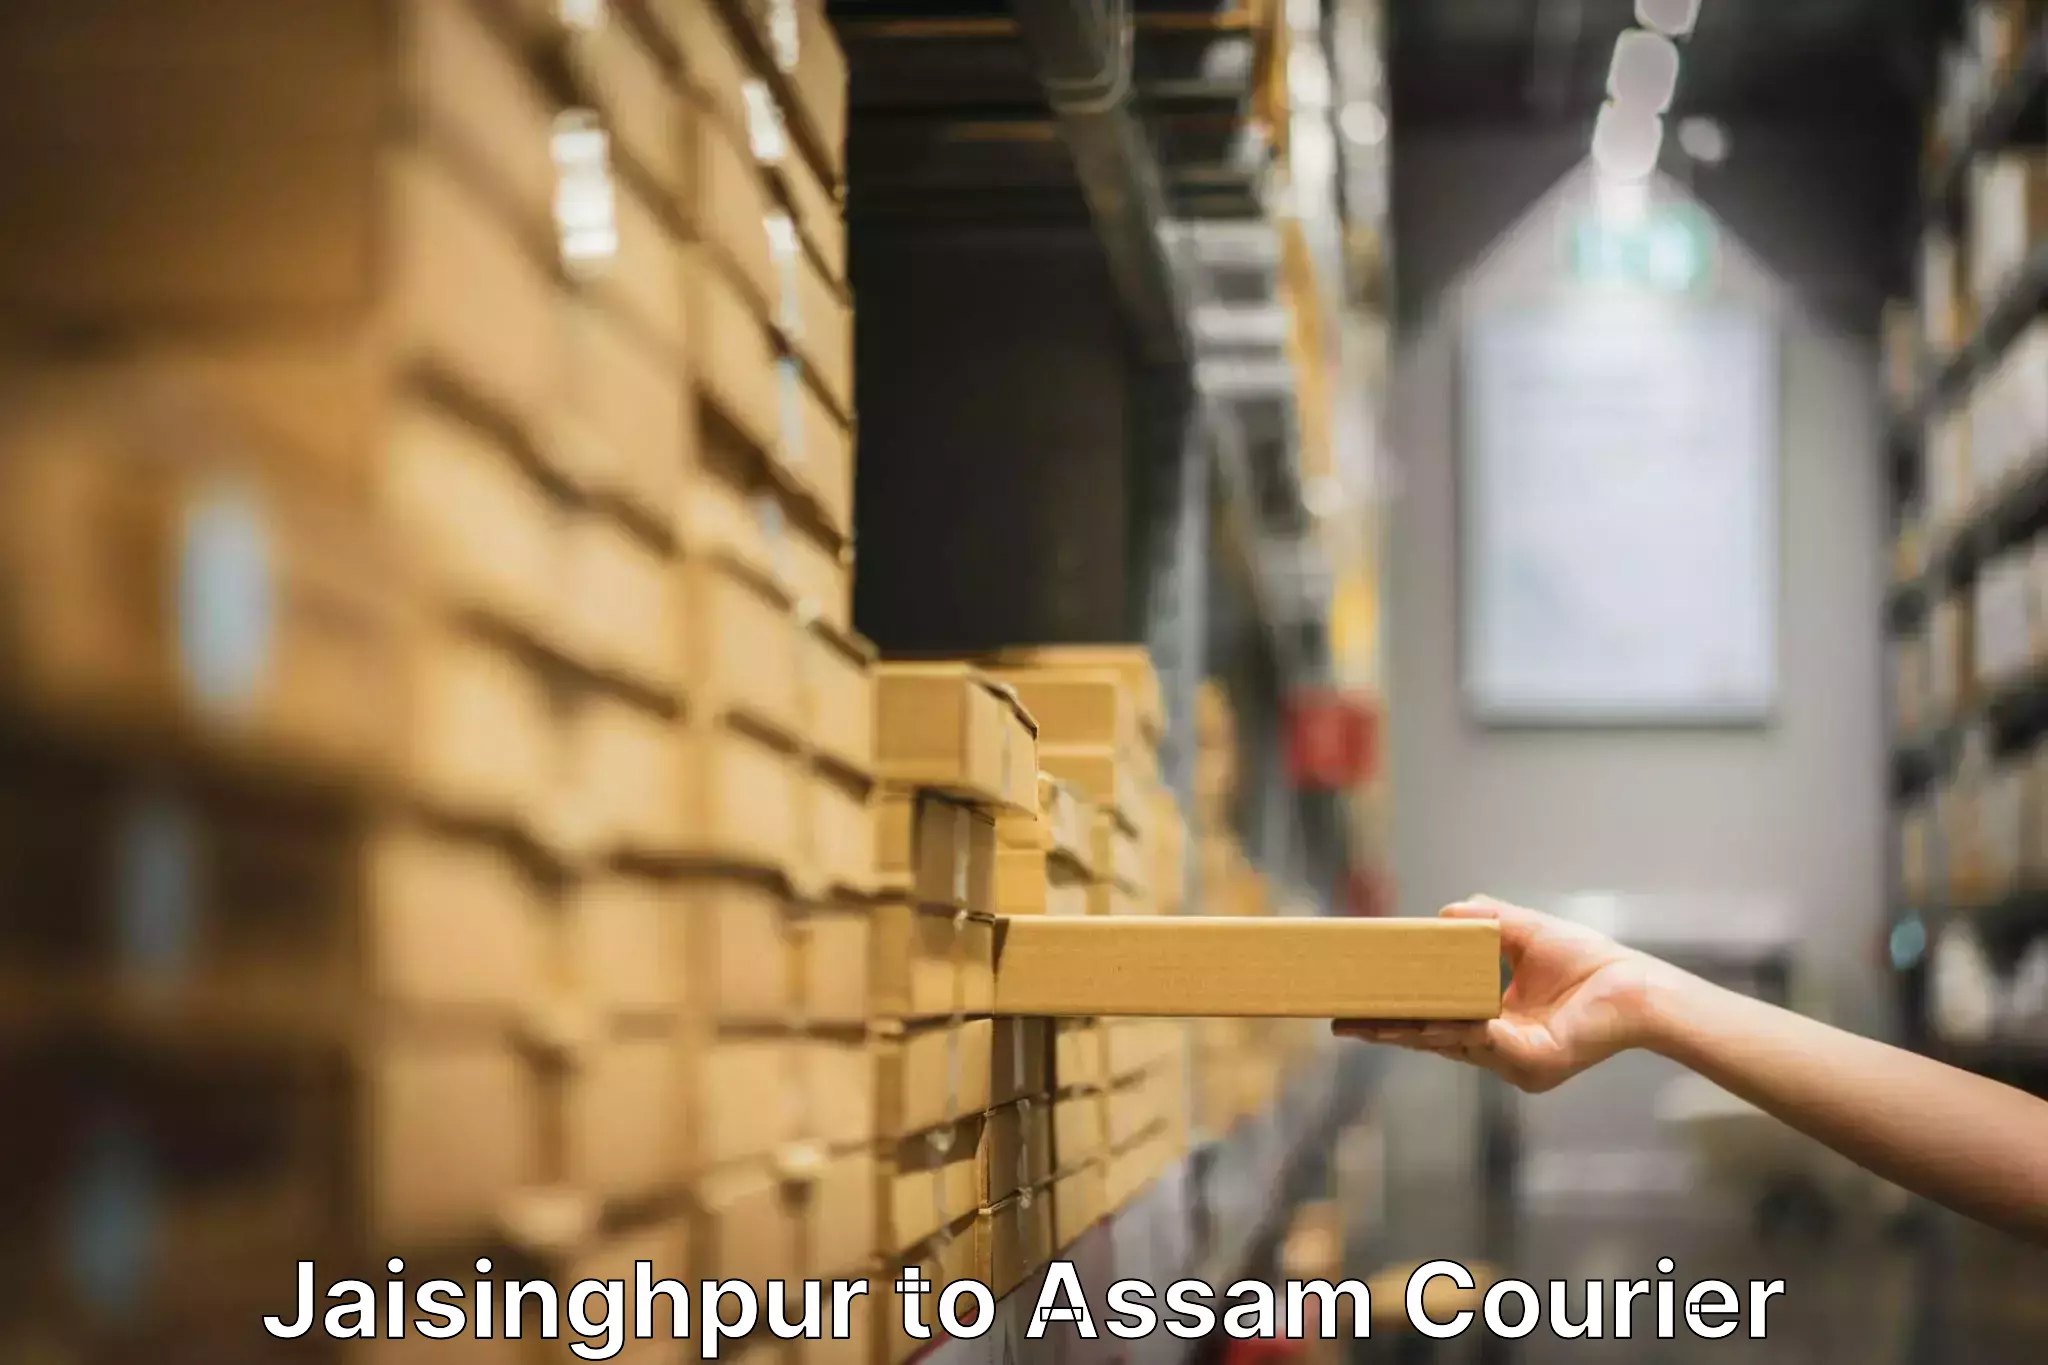 Professional home movers in Jaisinghpur to Assam